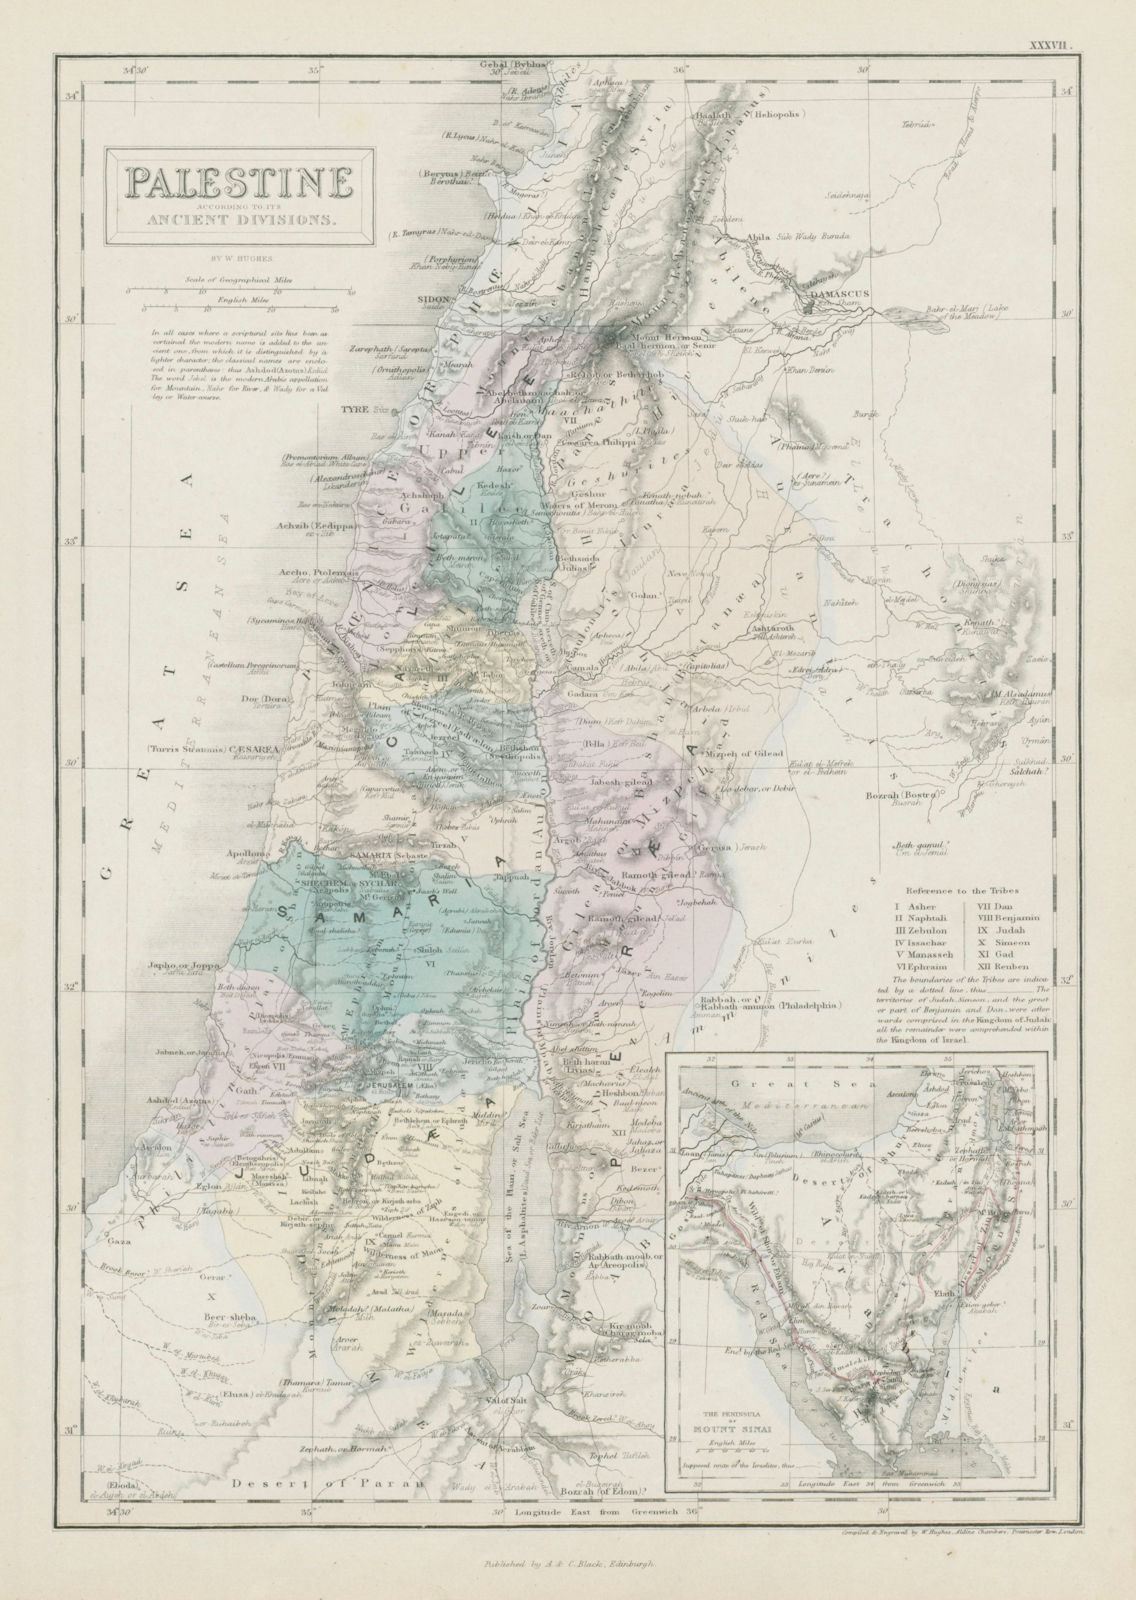 Palestine with its ancient divisions. Inset Sinai peninsula. HUGHES 1856 map